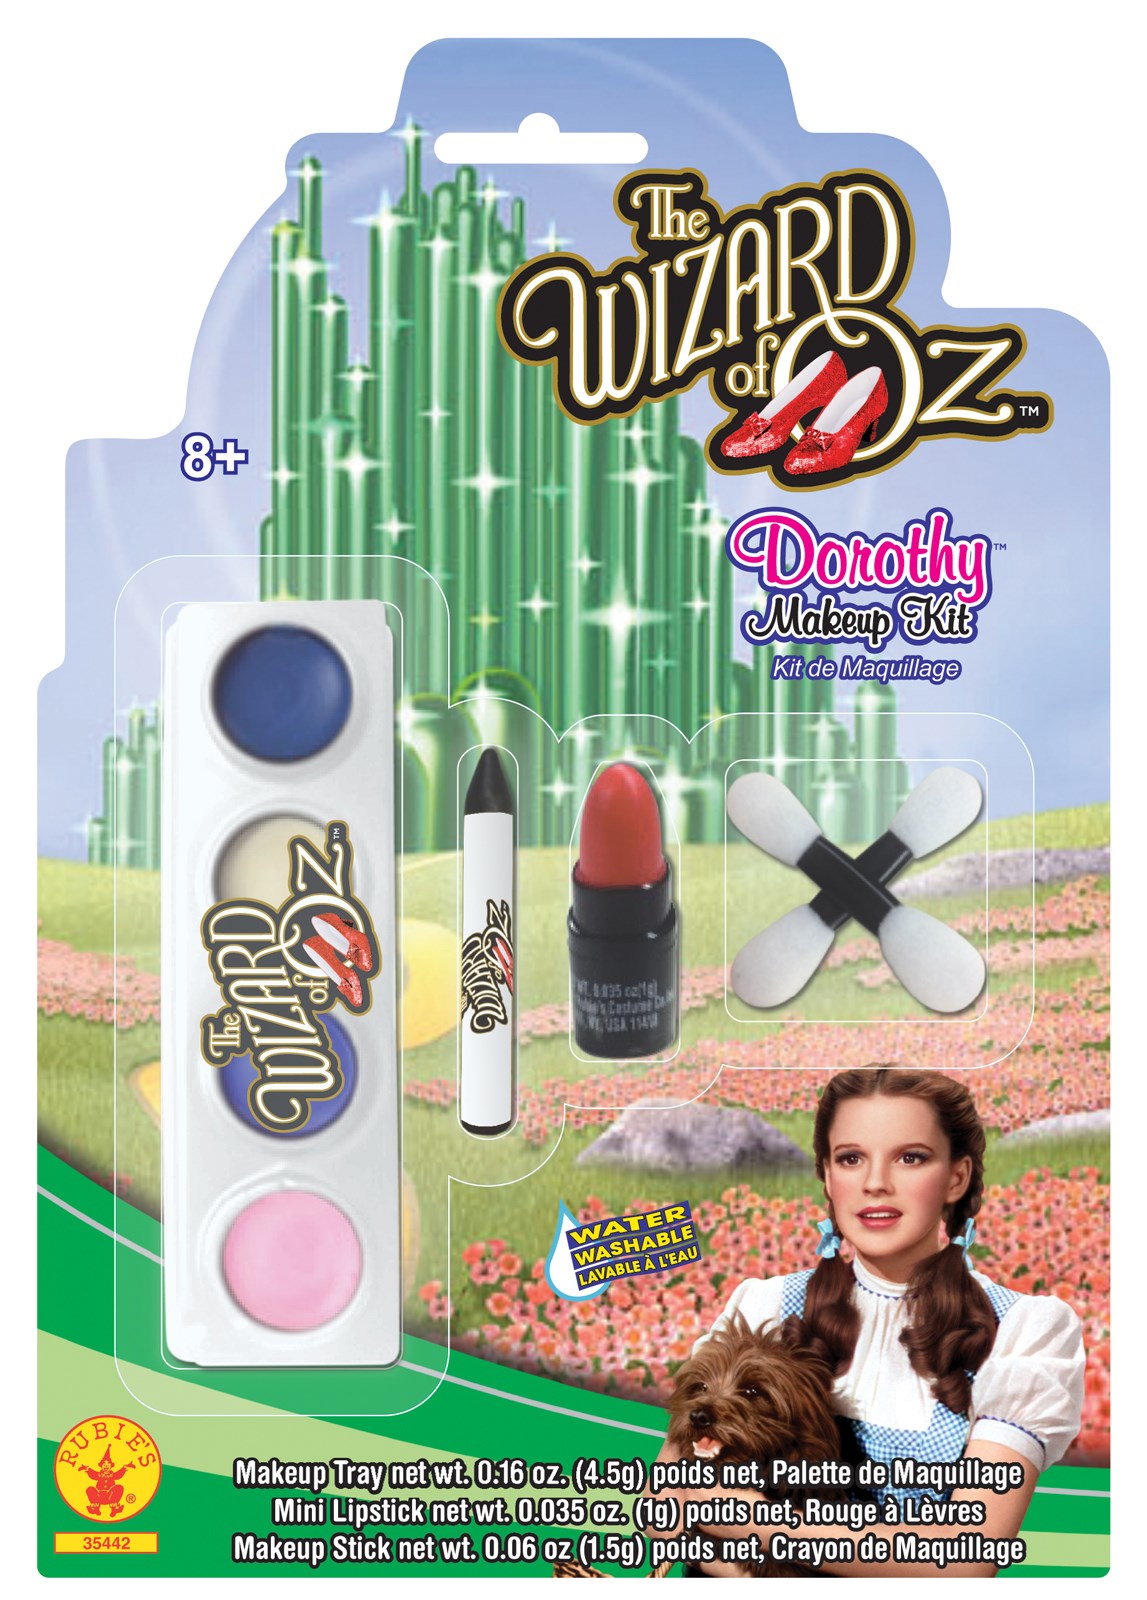 Wizard of Oz - Dorothy Girls Makeup Kit